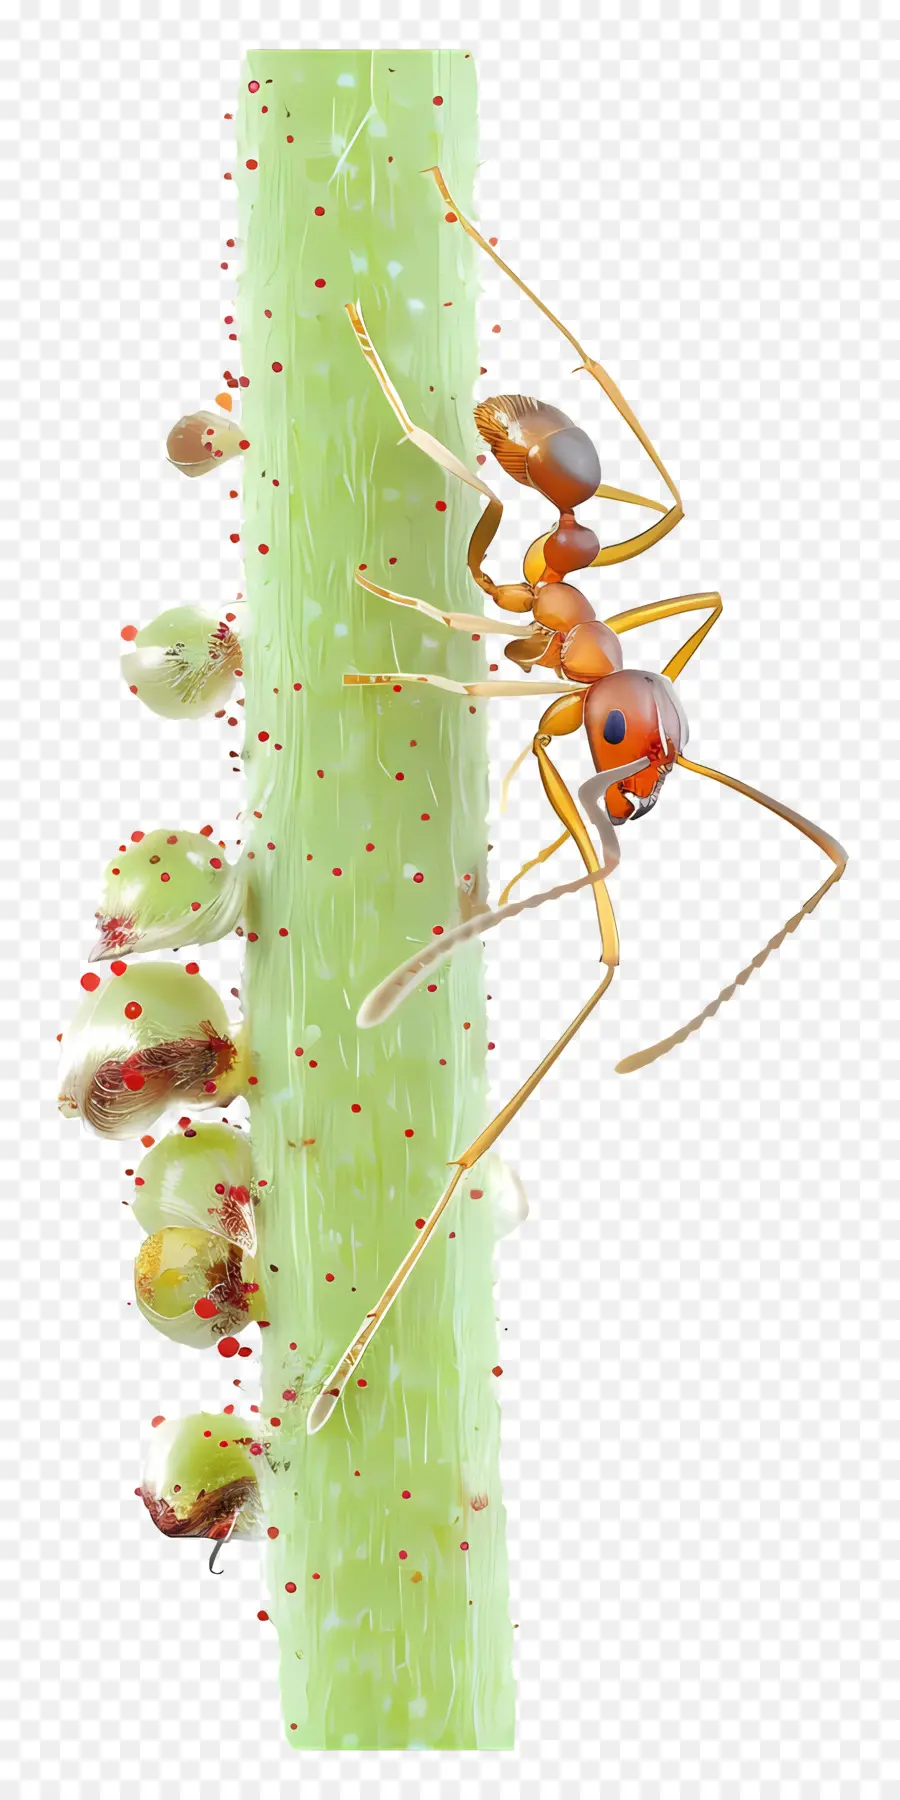 gambo vegetale di ant ant ant - Formica rossa che striscia su gambo vegetale verde